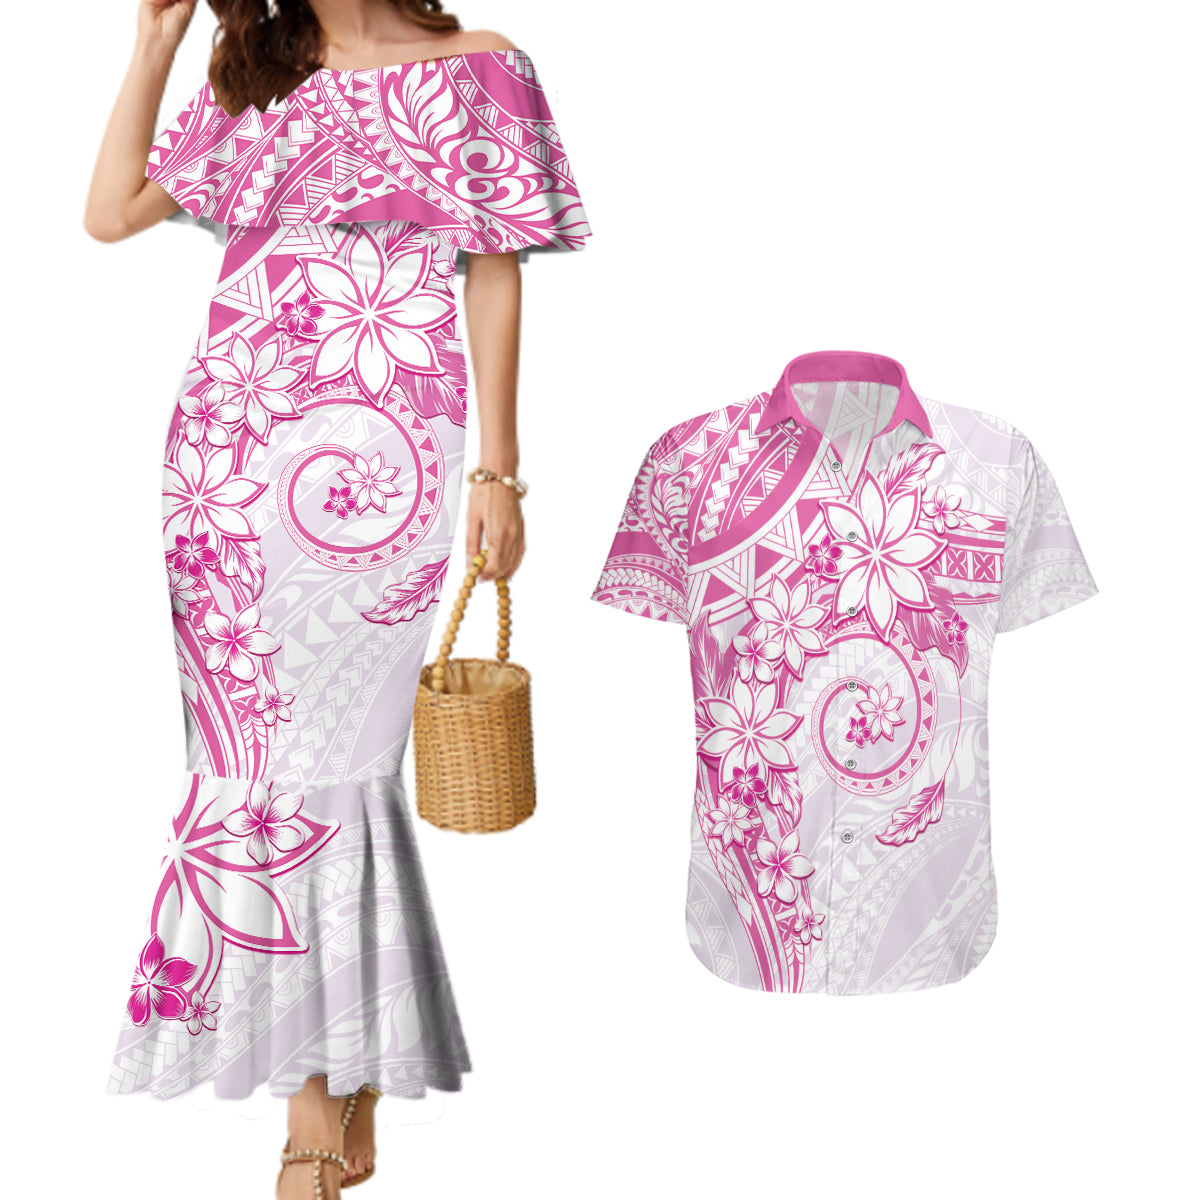 Polynesian Pattern With Plumeria Flowers Couples Matching Mermaid Dress and Hawaiian Shirt Pink